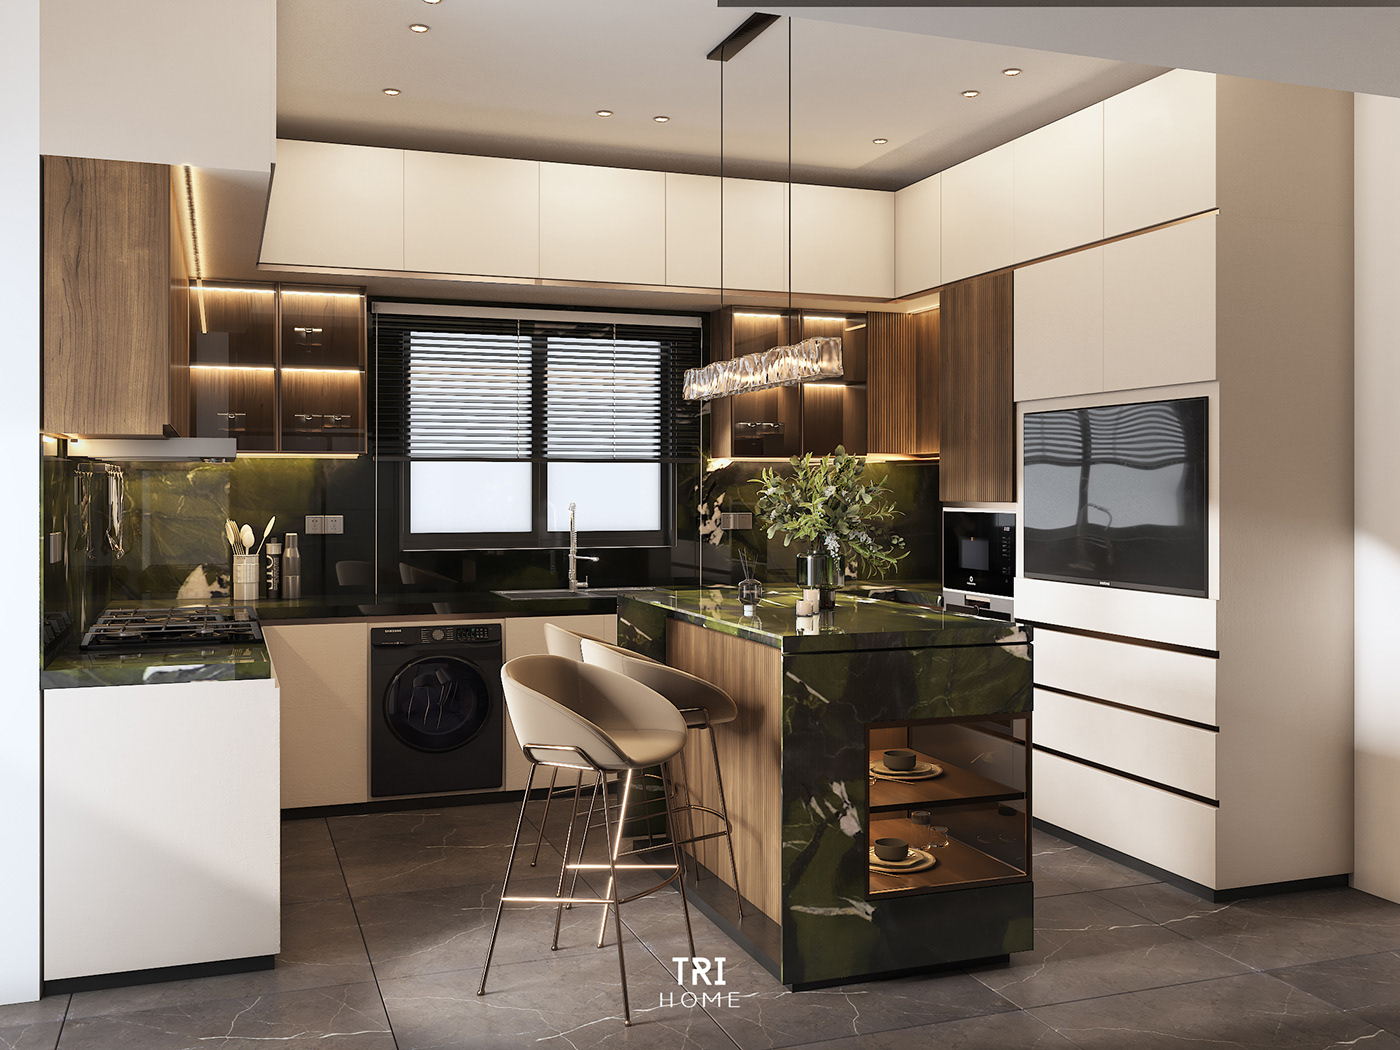 design olive green kitchen interior design  modern visualization architecture concept Space 